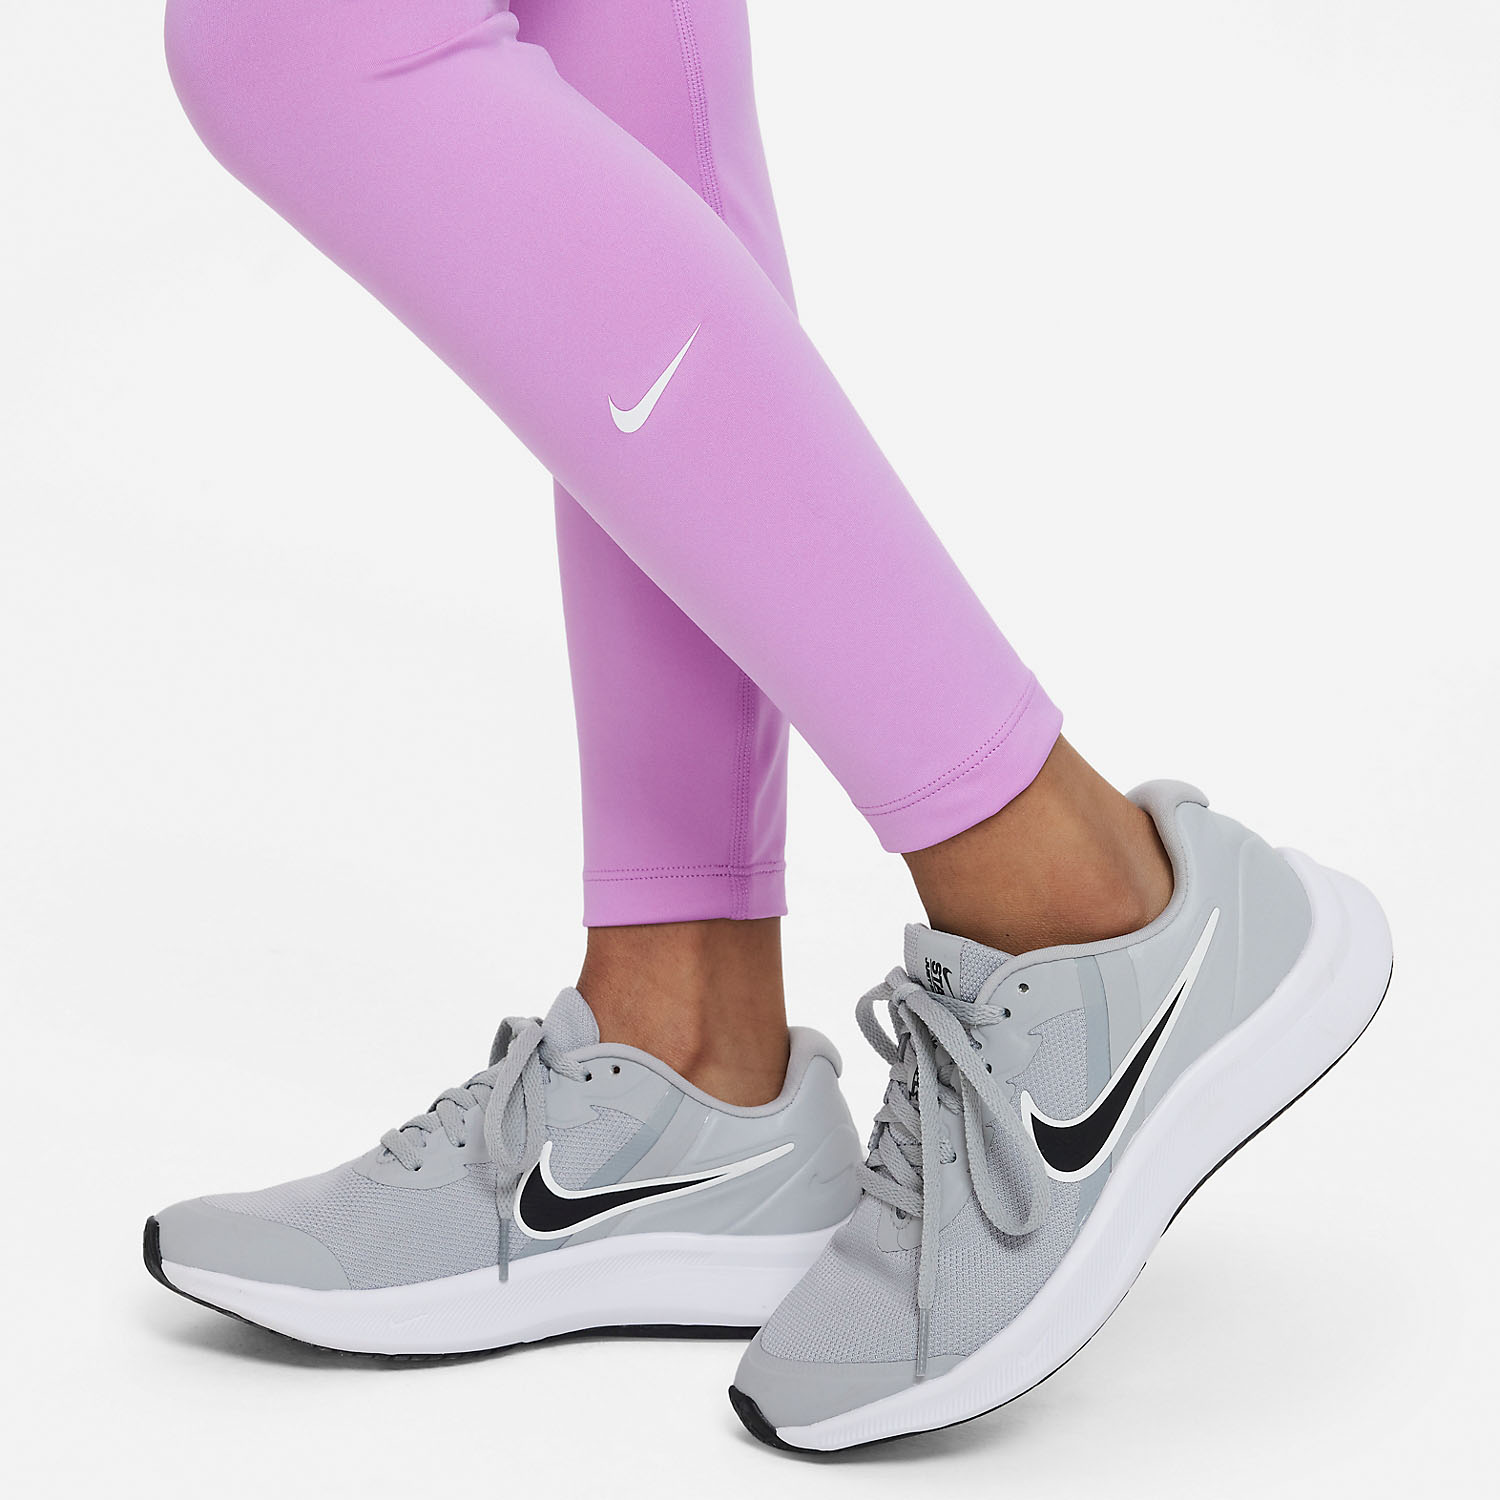 Nike Dri-FIT One Girl's Tennis Tights - Rush Fuchsia/White